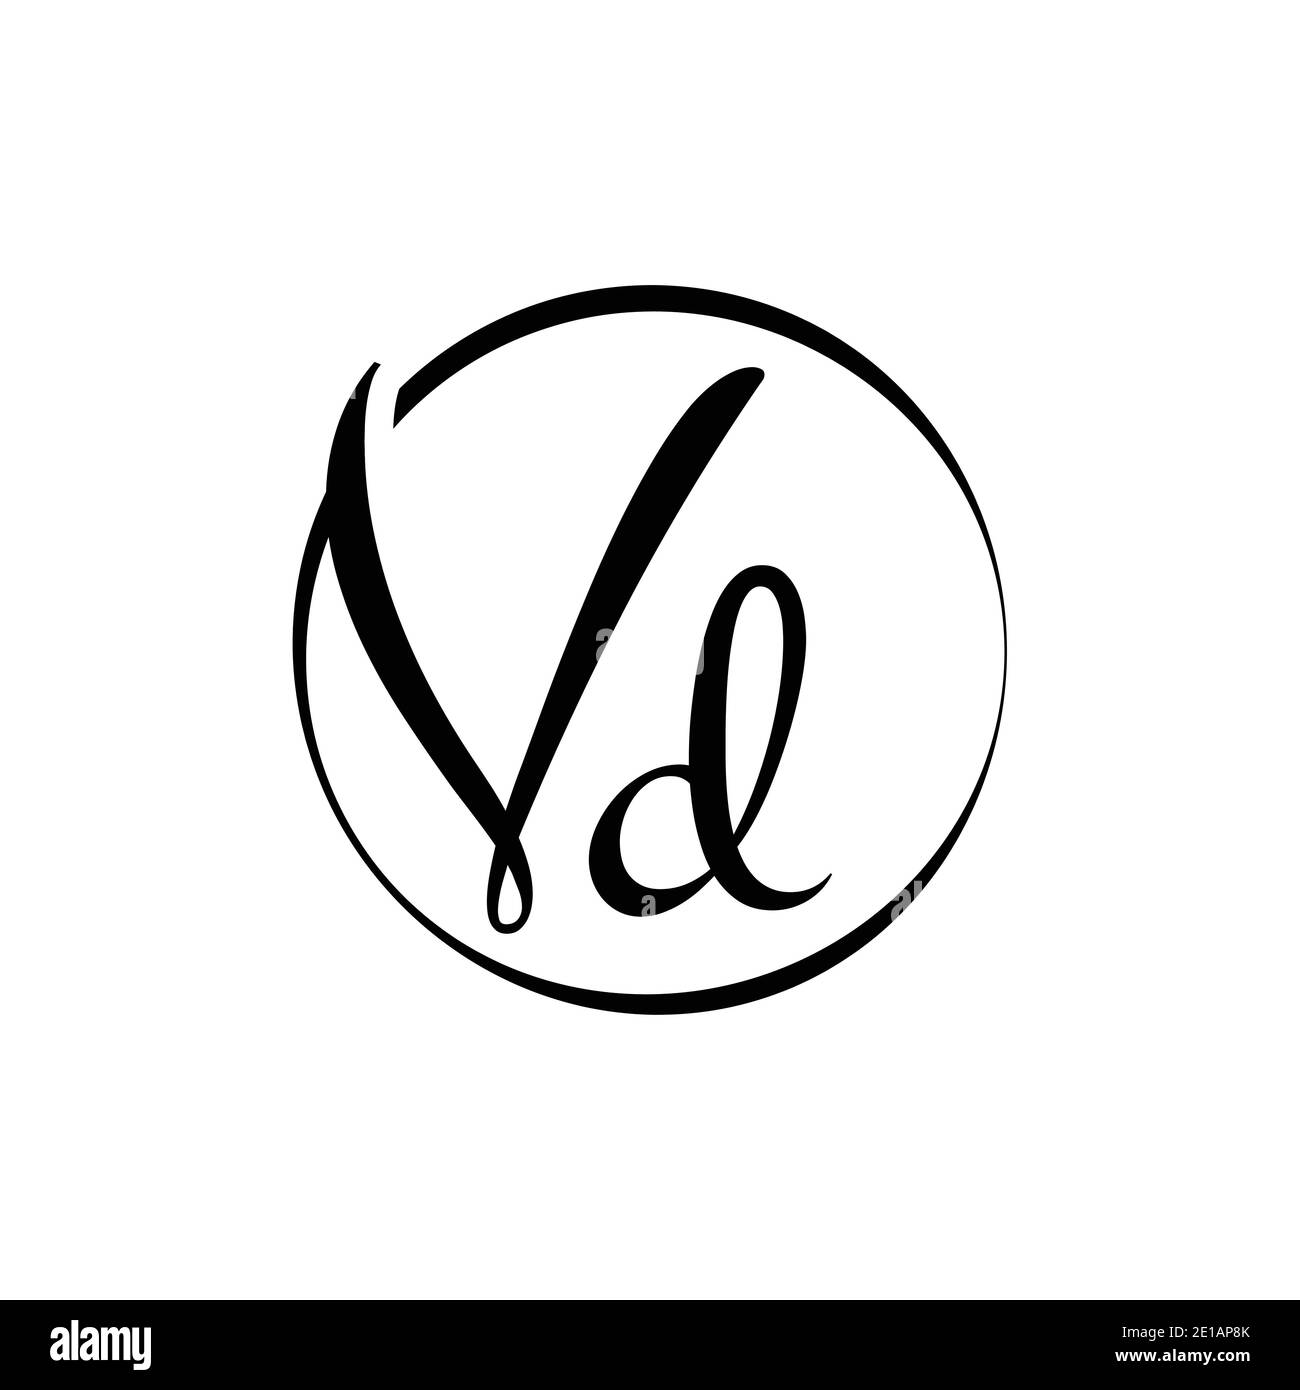 Initial VD letter Logo Design vector Template. Abstract Script Letter VD Logo Vector. Stock Vector